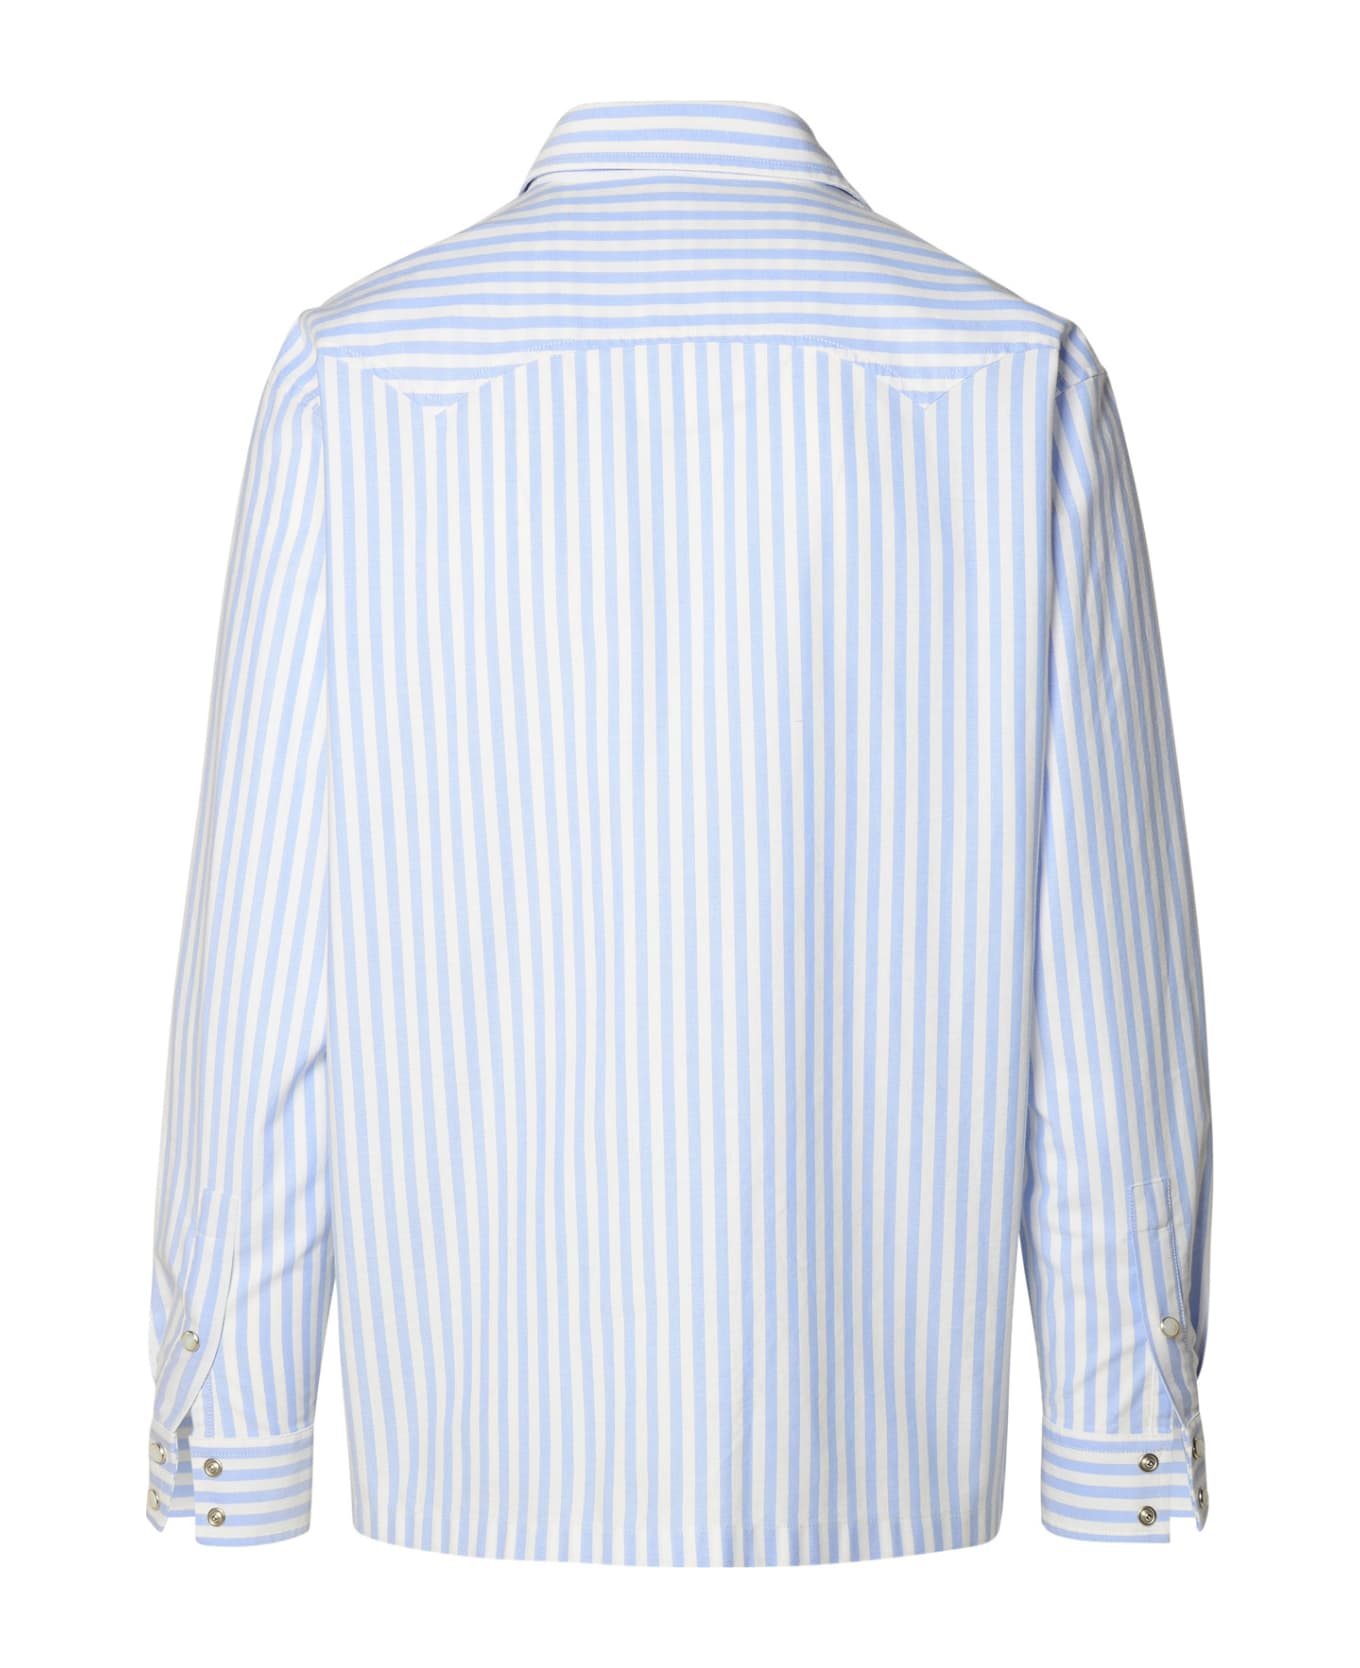 Palm Angels Light Blue Cotton Shirt - STIPES WHITE LIGHT BLUE シャツ